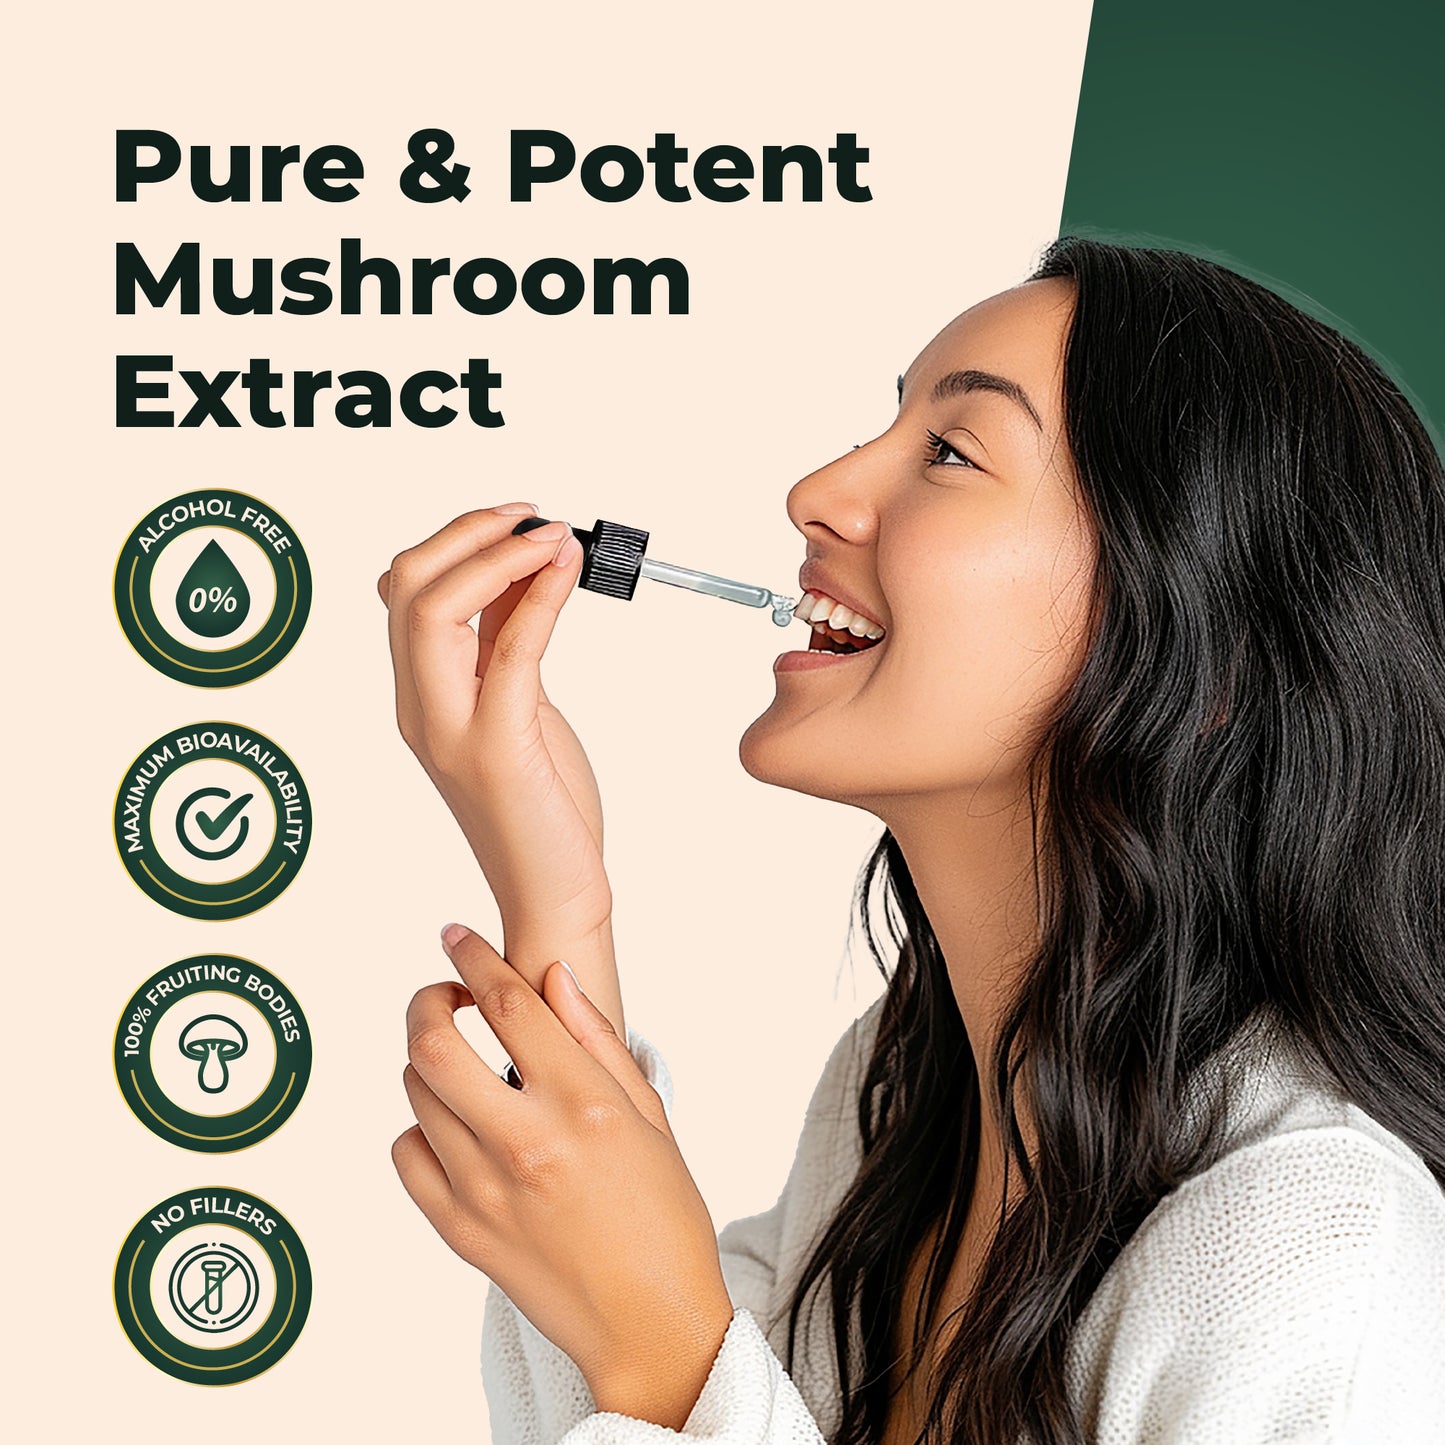 Pure & Potent Mushroom Extract